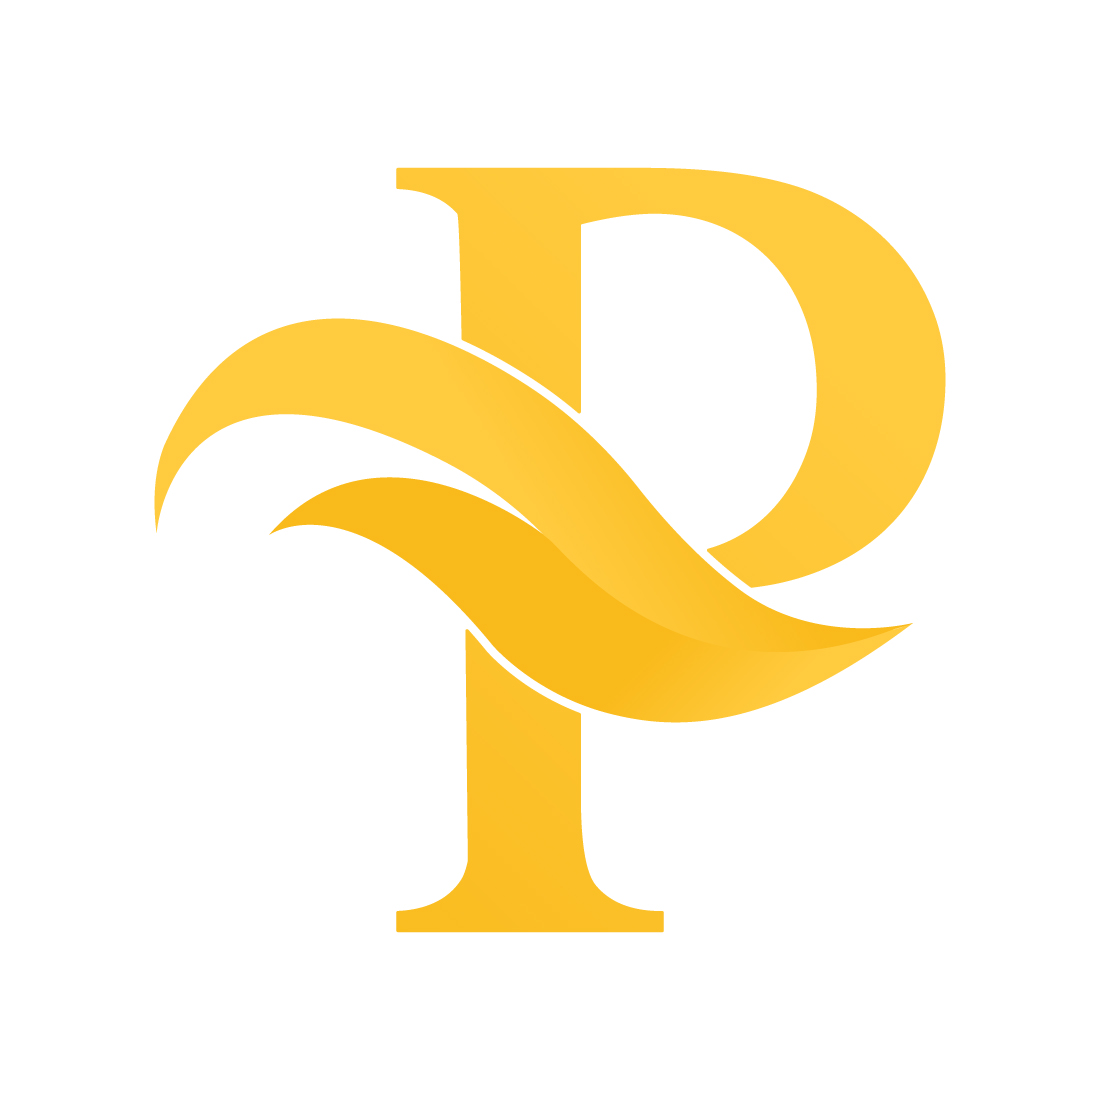 Initials P letter logo deign vector images P logo golden color best company identity cover image.